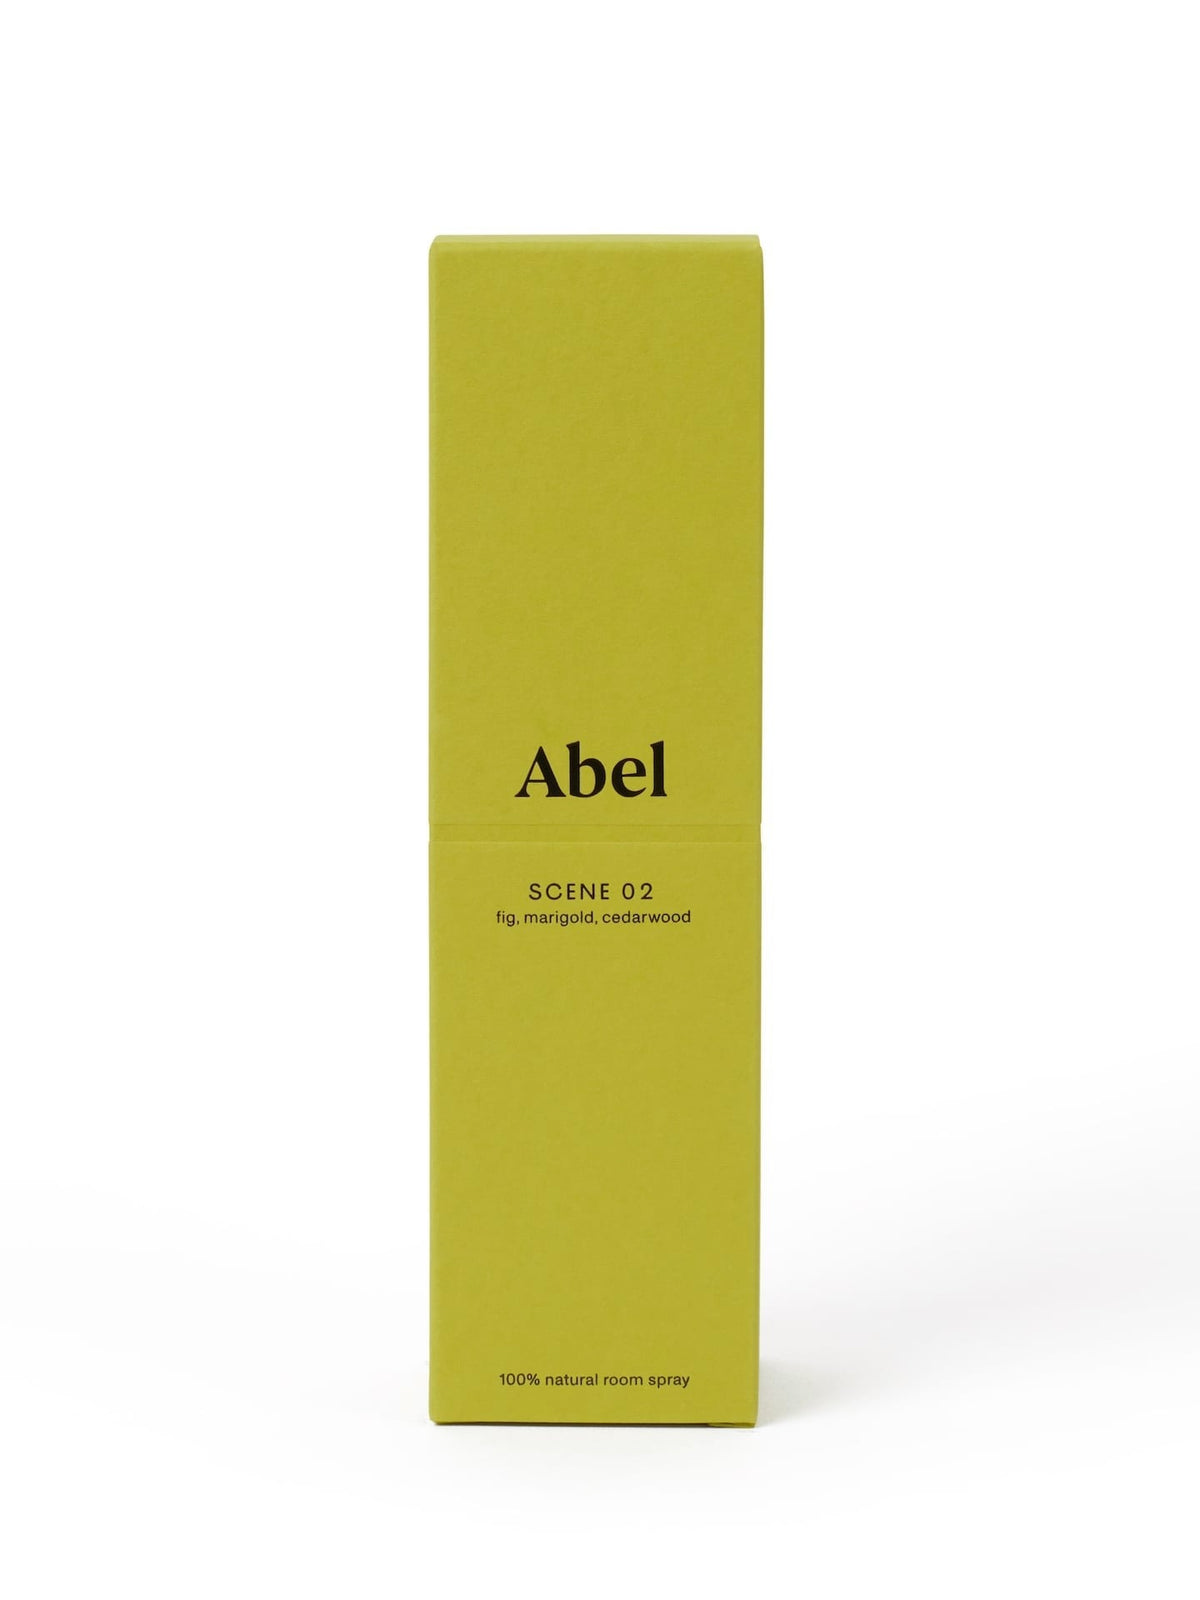 Yellow packaging of Abel Room Spray – Scene 02 ⋅ fig, marigold, cedarwood